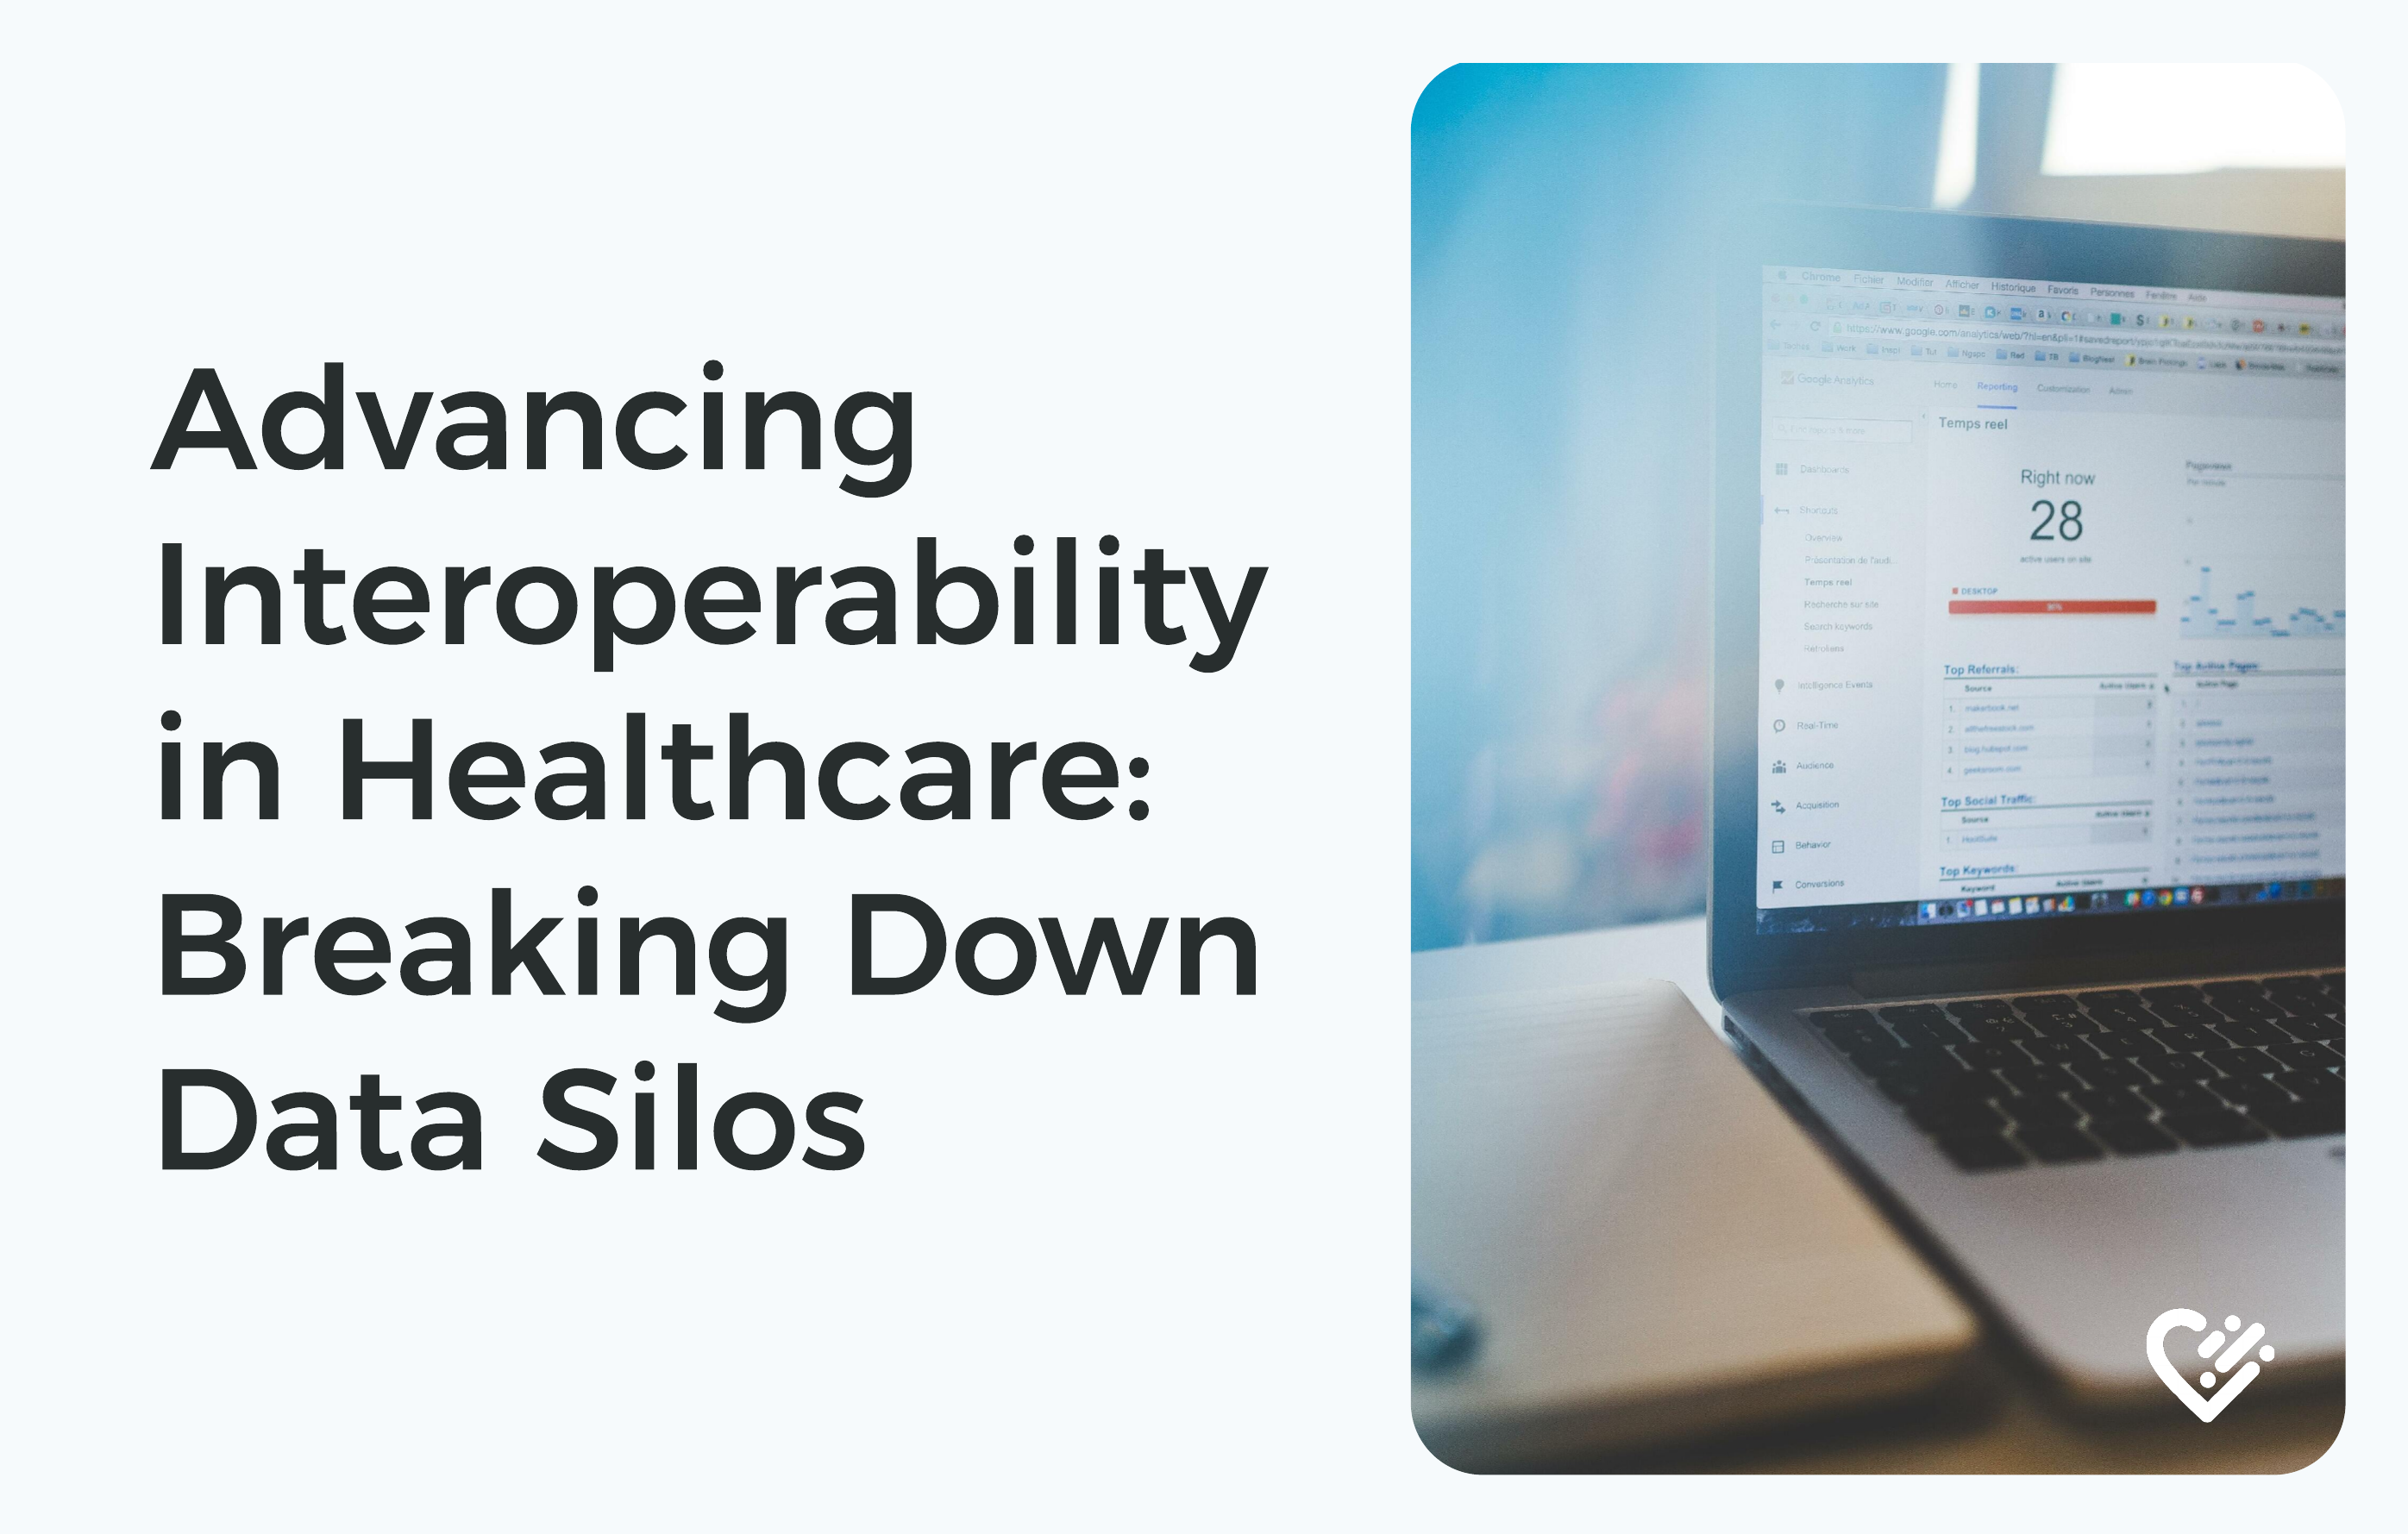 Advancing Healthcare Interoperability: Breaking Down Data Silos